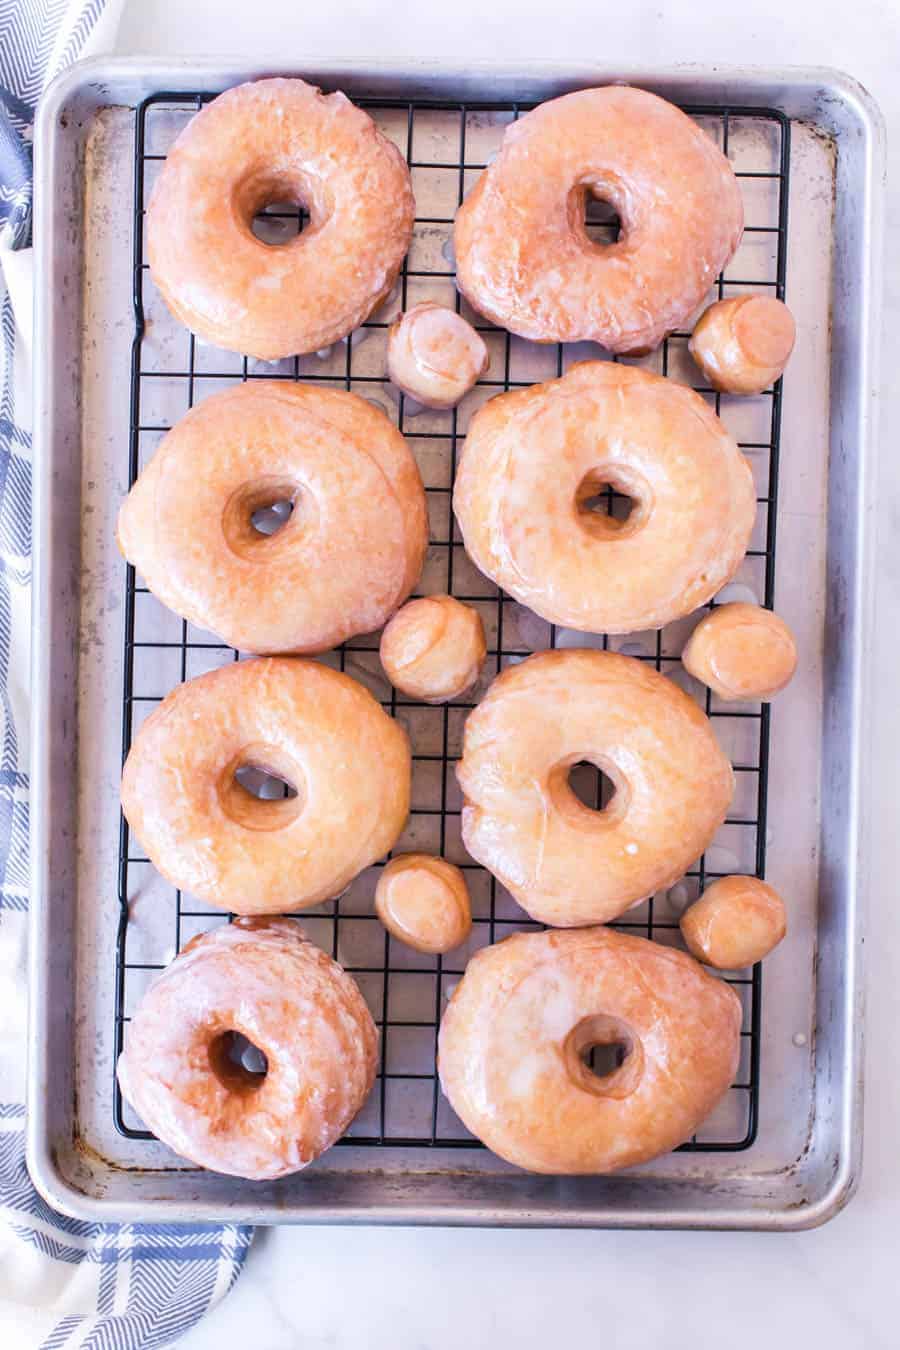 Rack of glazed donuts